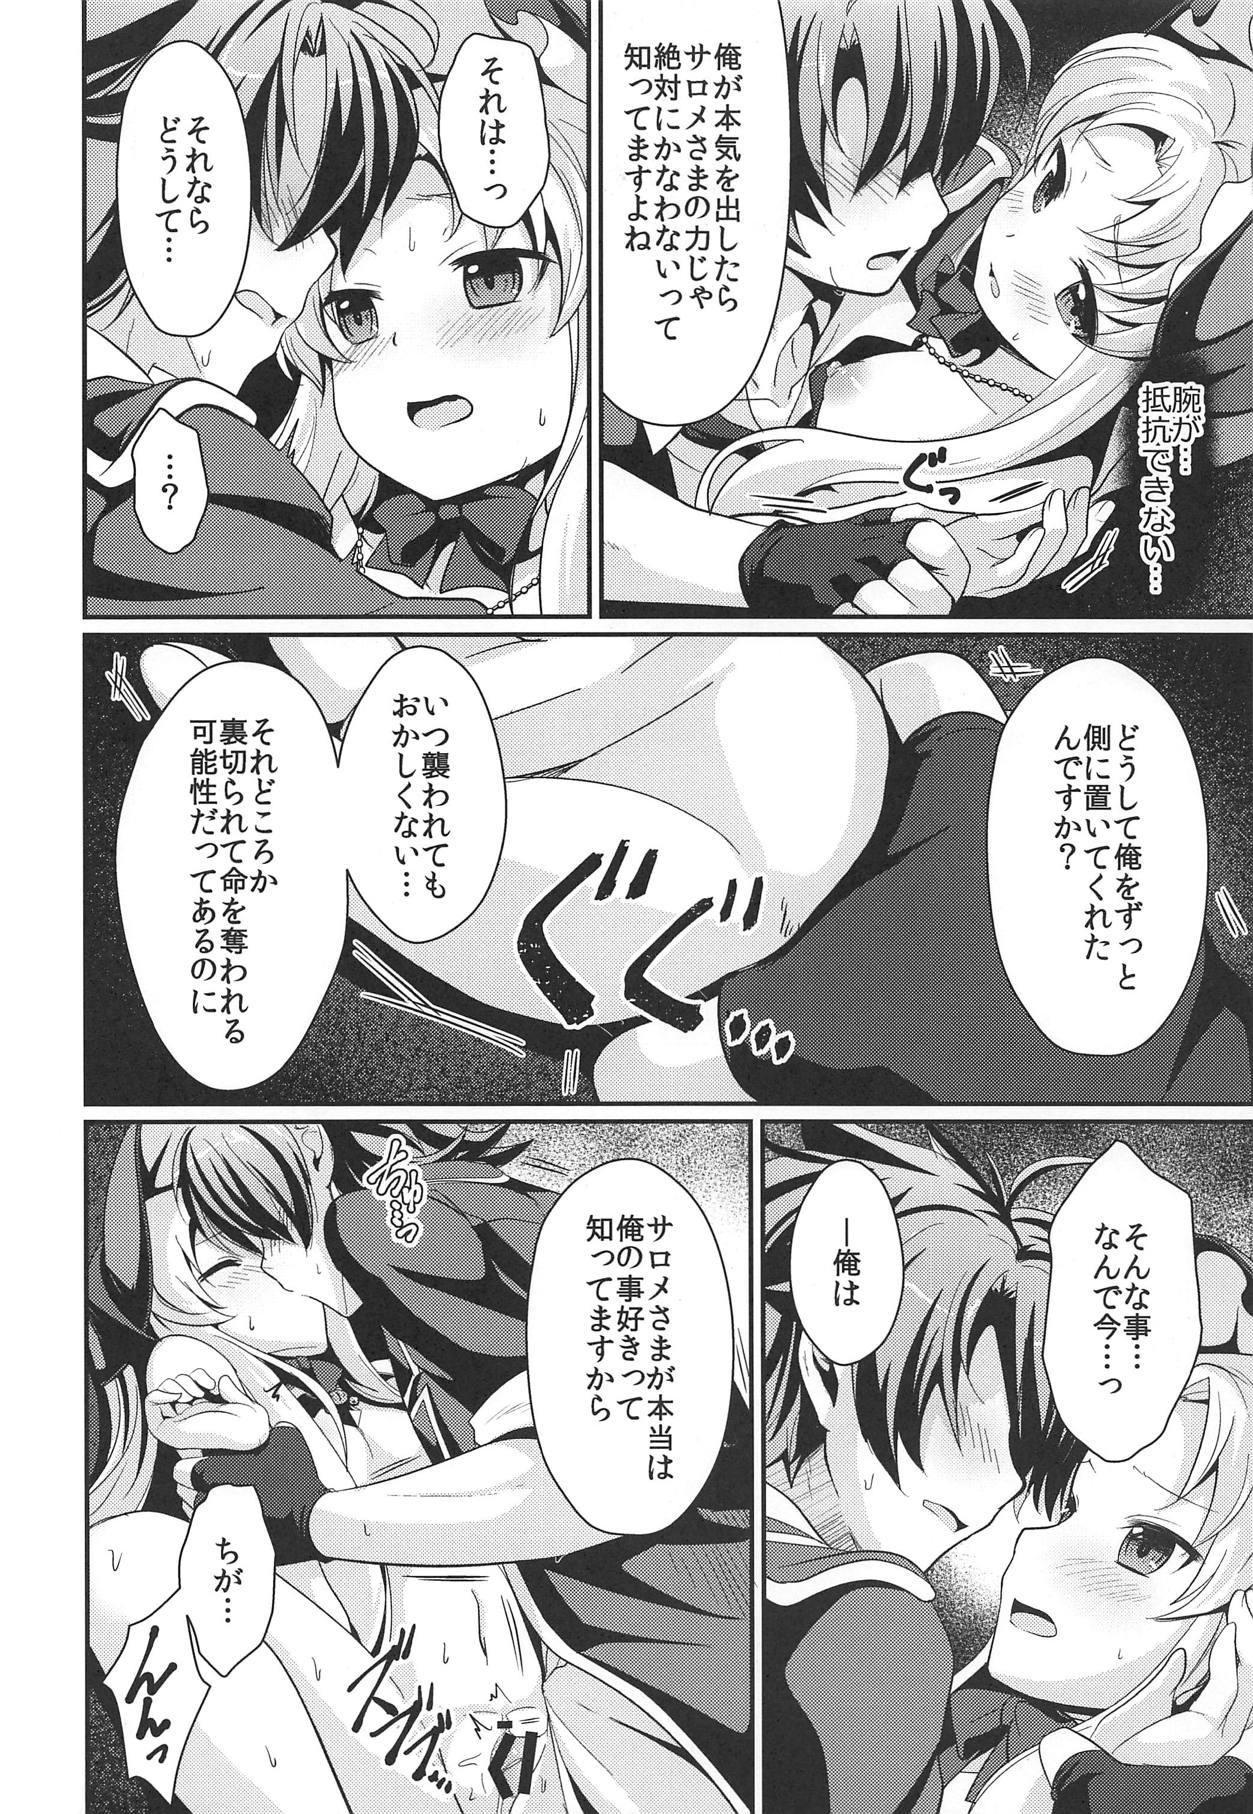 Morrita Kinki no Alchimia 2 - Kaitou tenshi twin angel Cute - Page 9